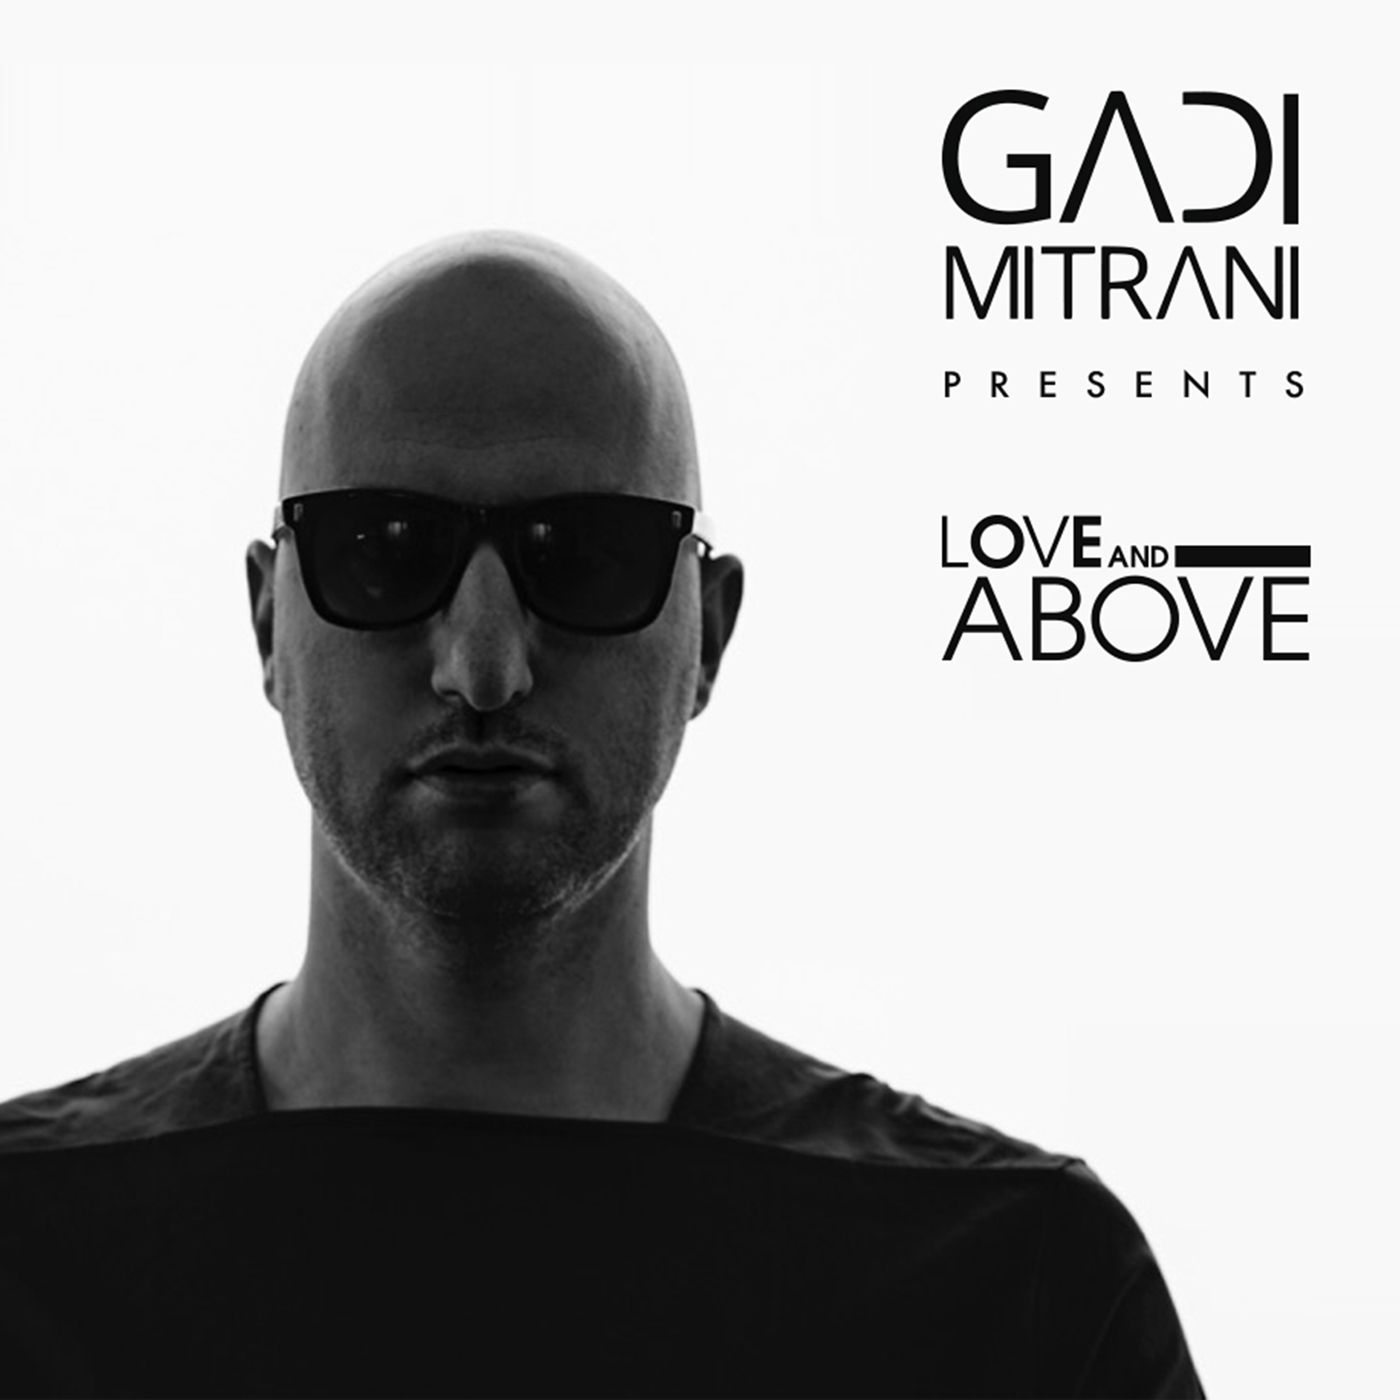 Gadi Mitrani presents Love and Above (Live @ Baleiarica Music Showcase Egypt)